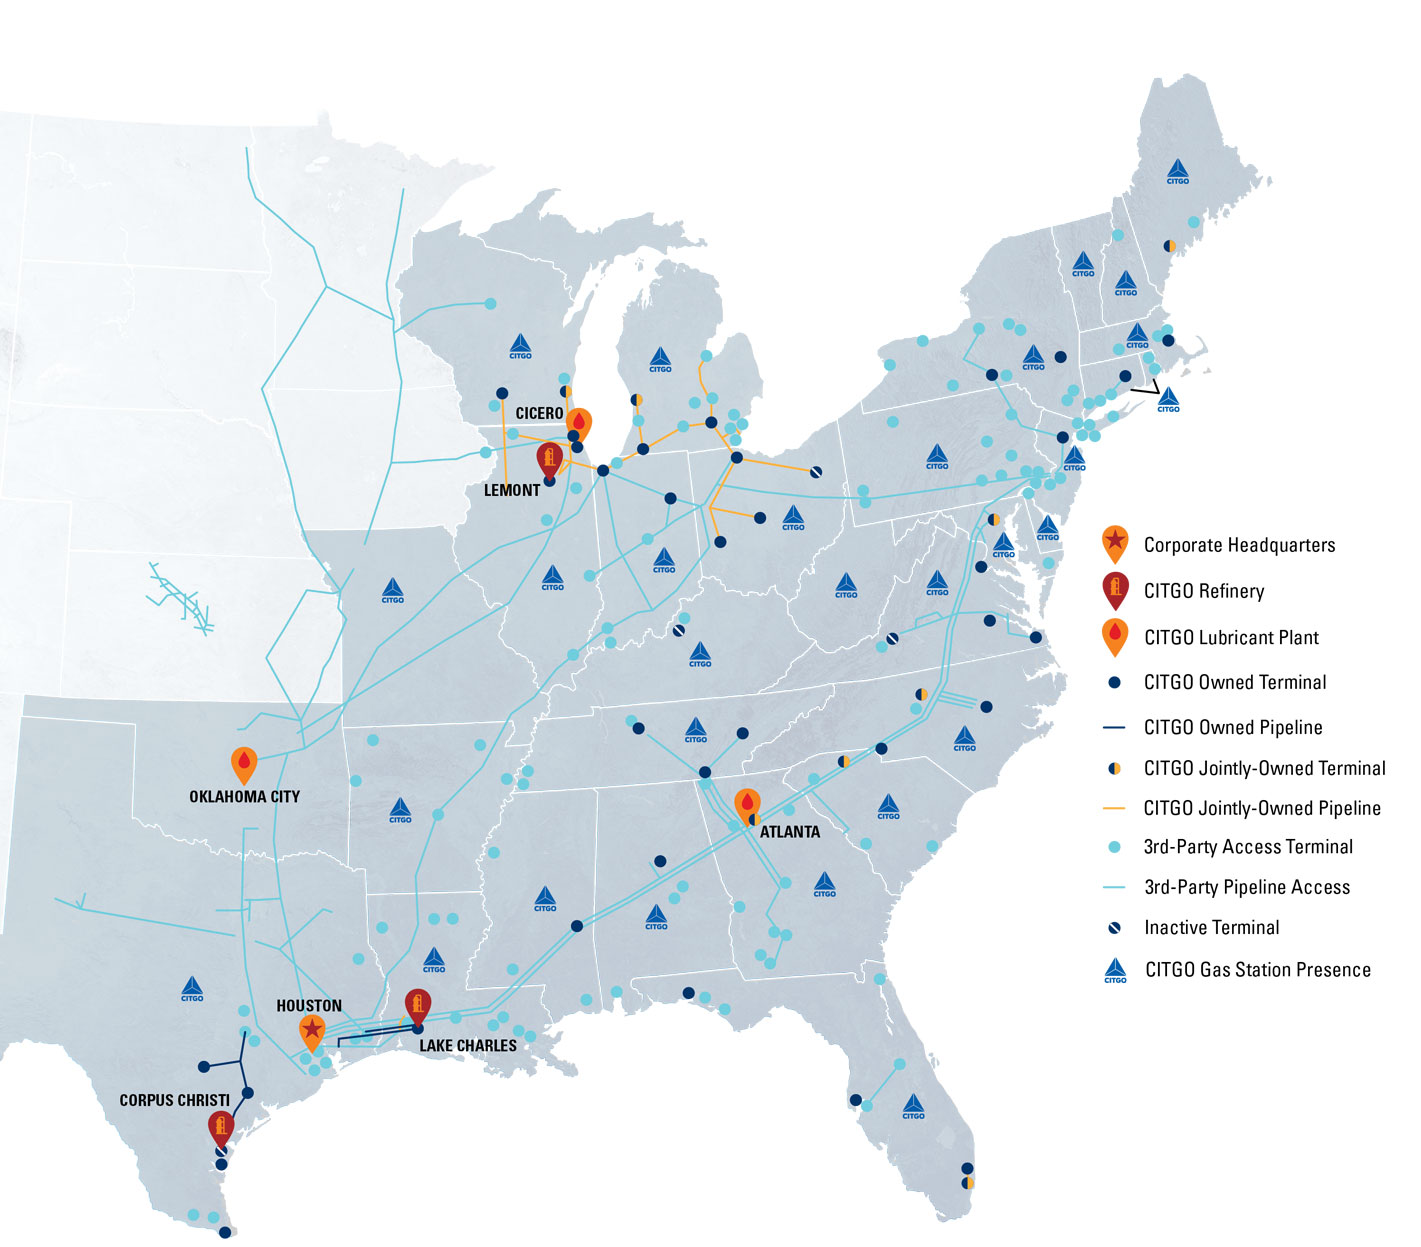 CITGO operations across the US